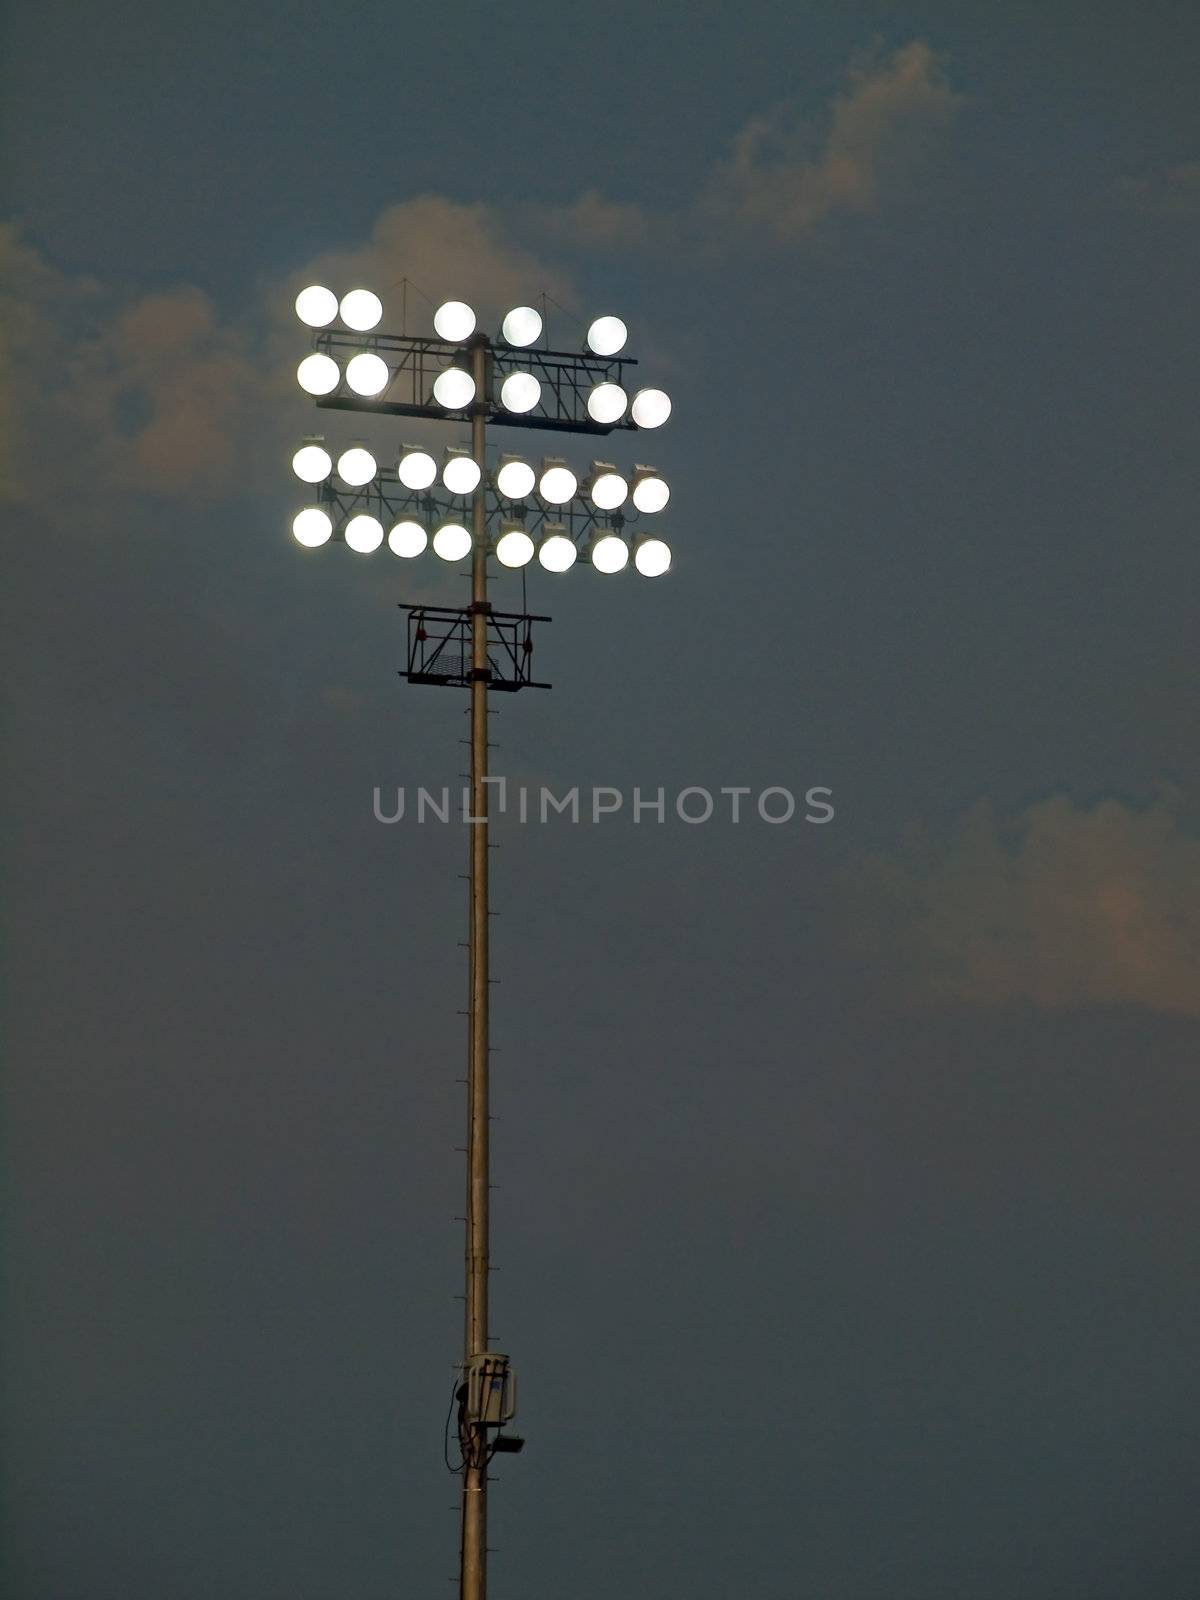 Stadium Lights Against an Evening Sky at Dusk